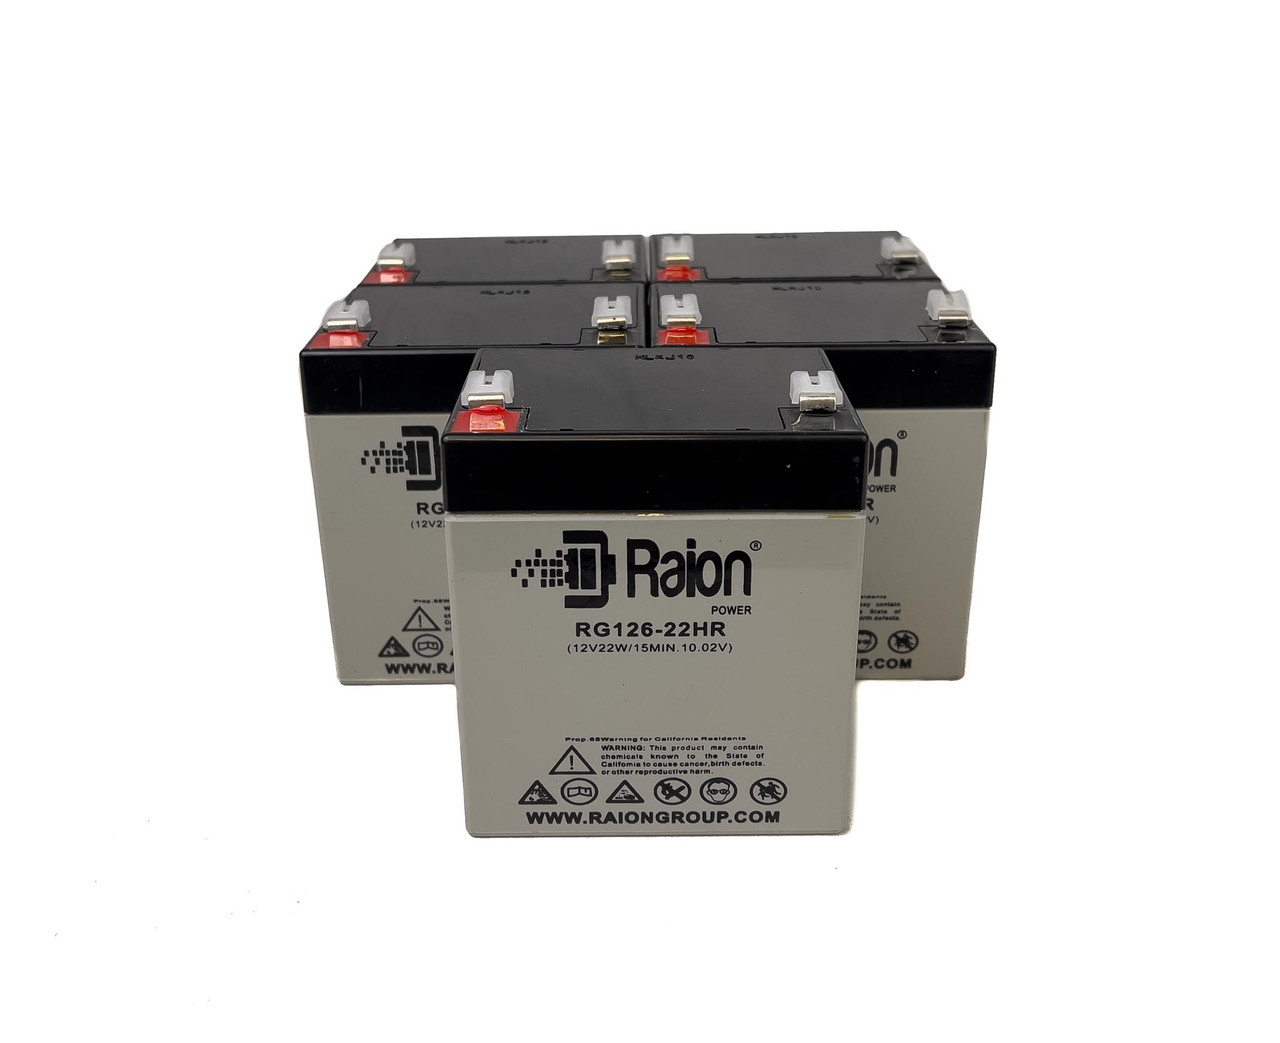 Raion Power RG126-22HR 12V 5.5Ah Replacement UPS Battery Cartridge for Powerware Prestige EXT 750 - 5 Pack